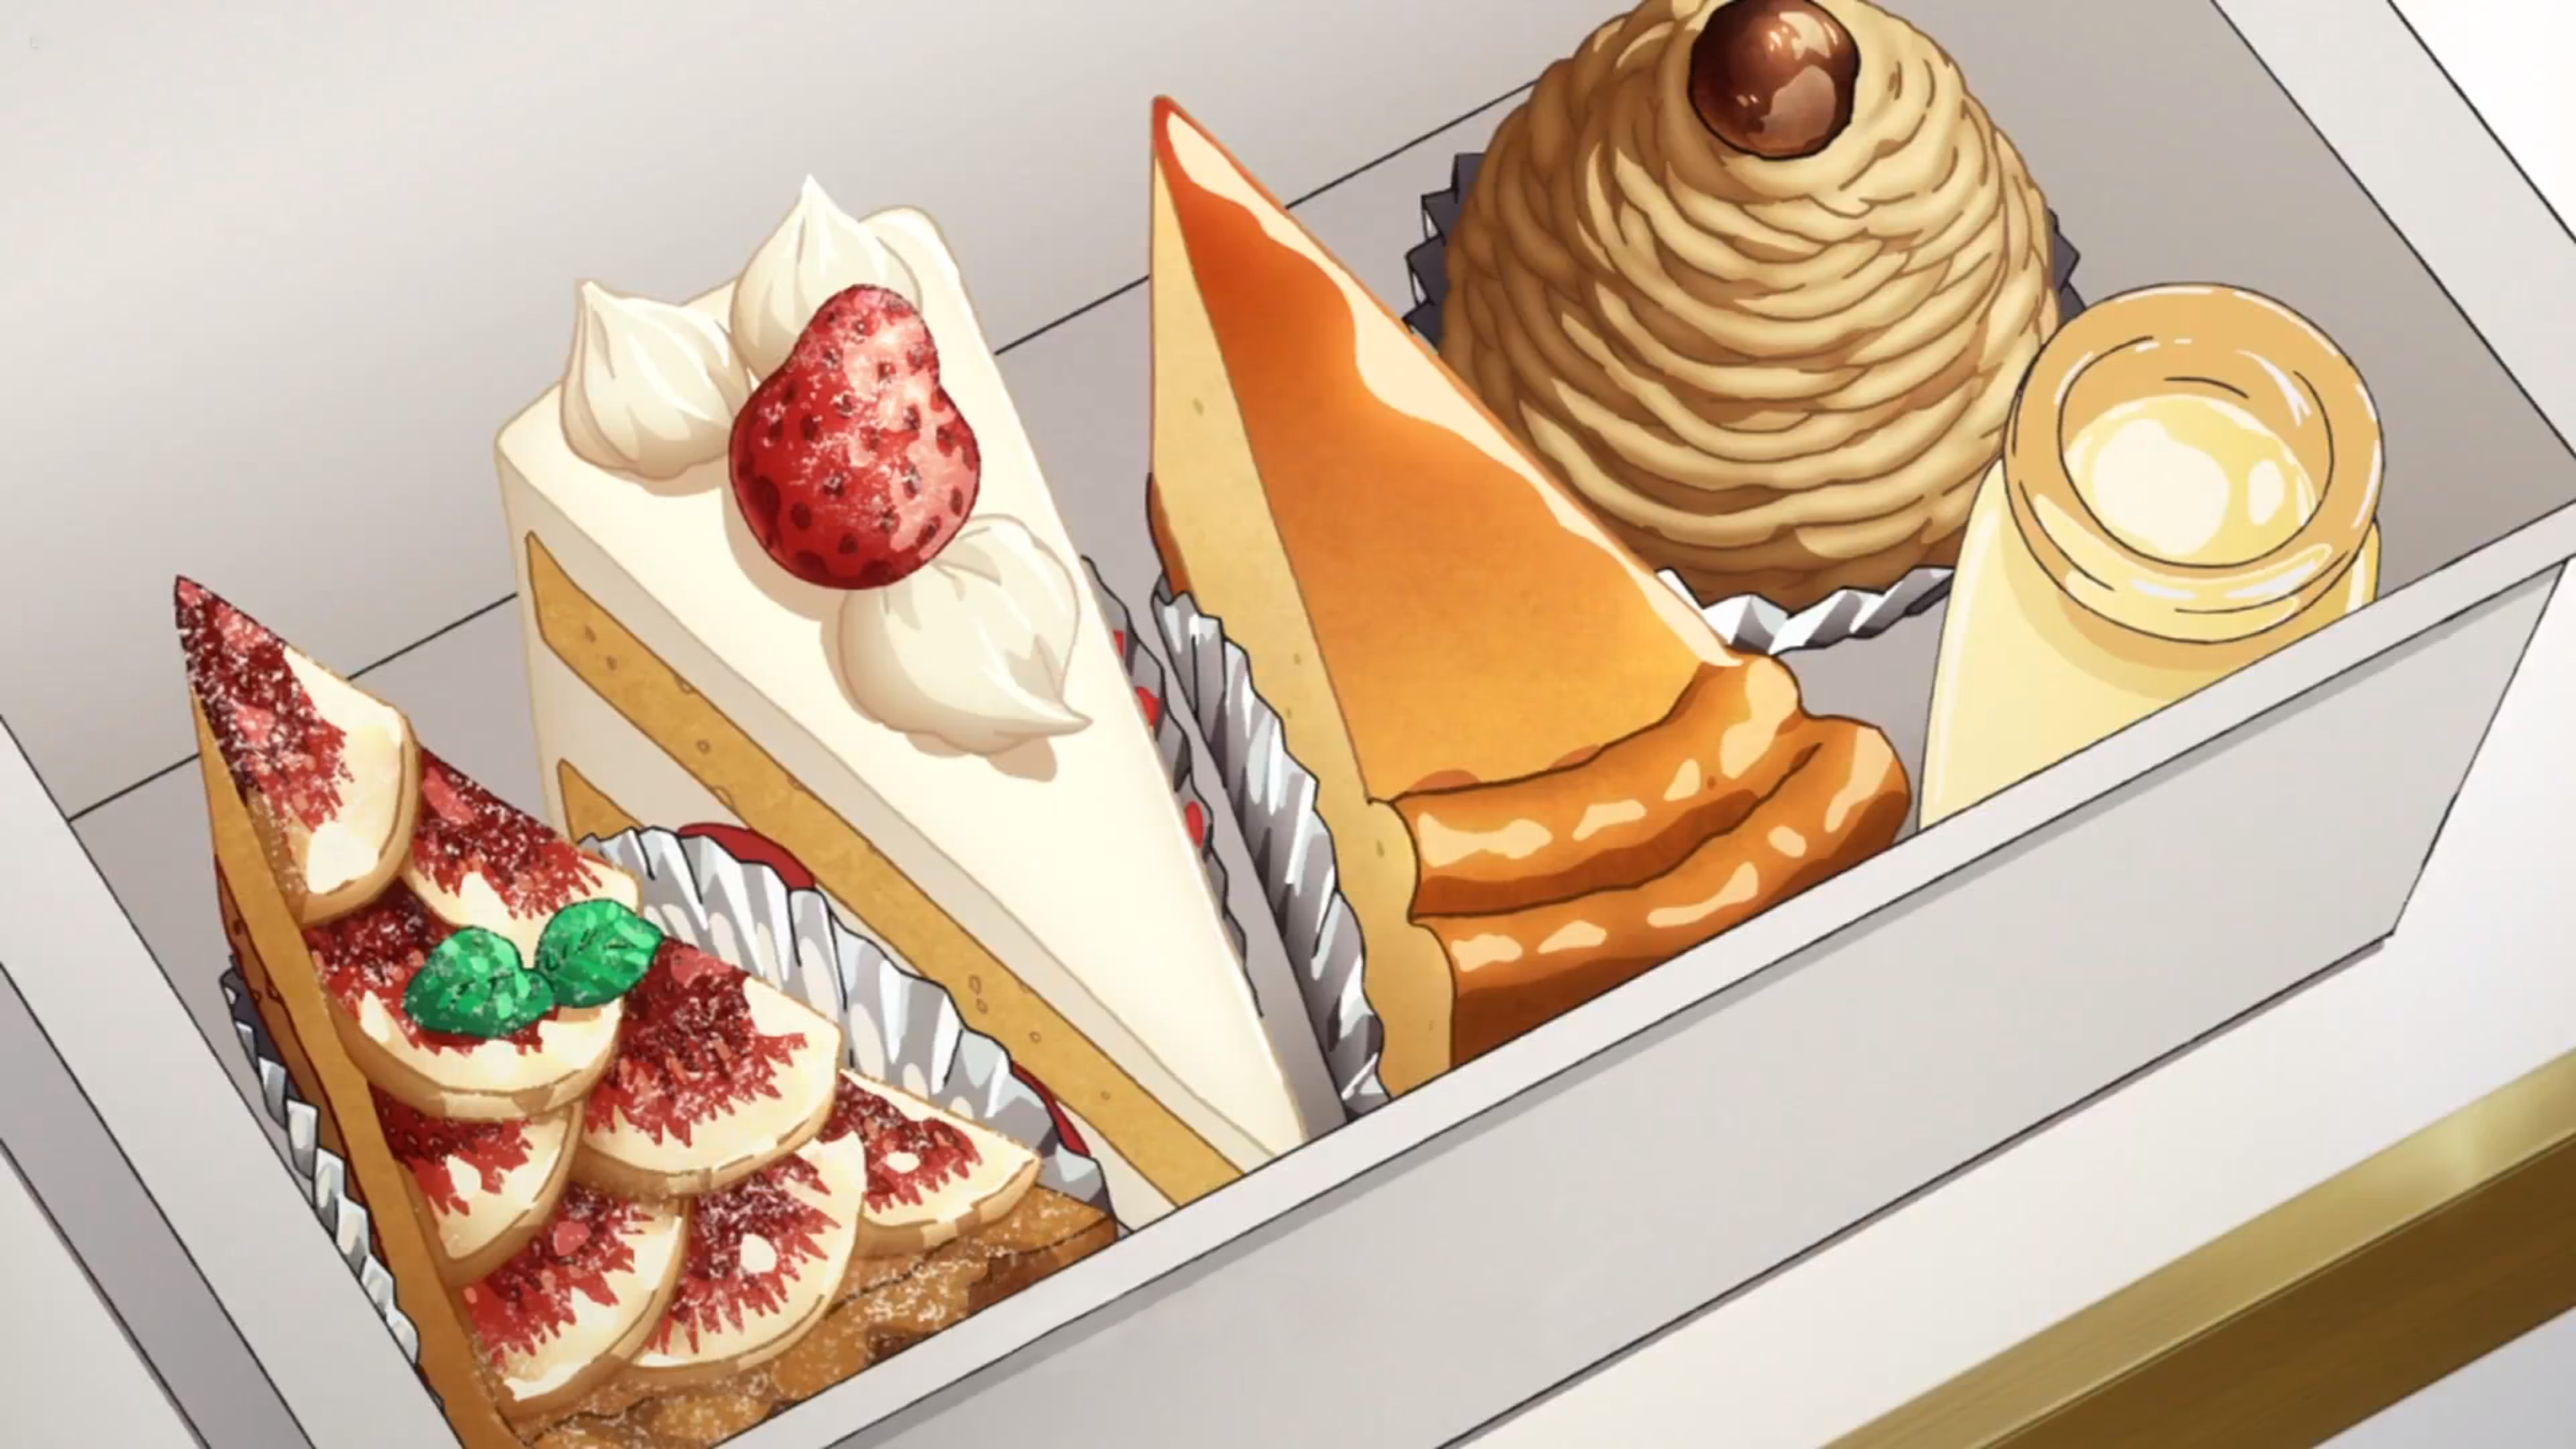 Pin by i am no one on Anime Food | Yummy food, Food, Love food